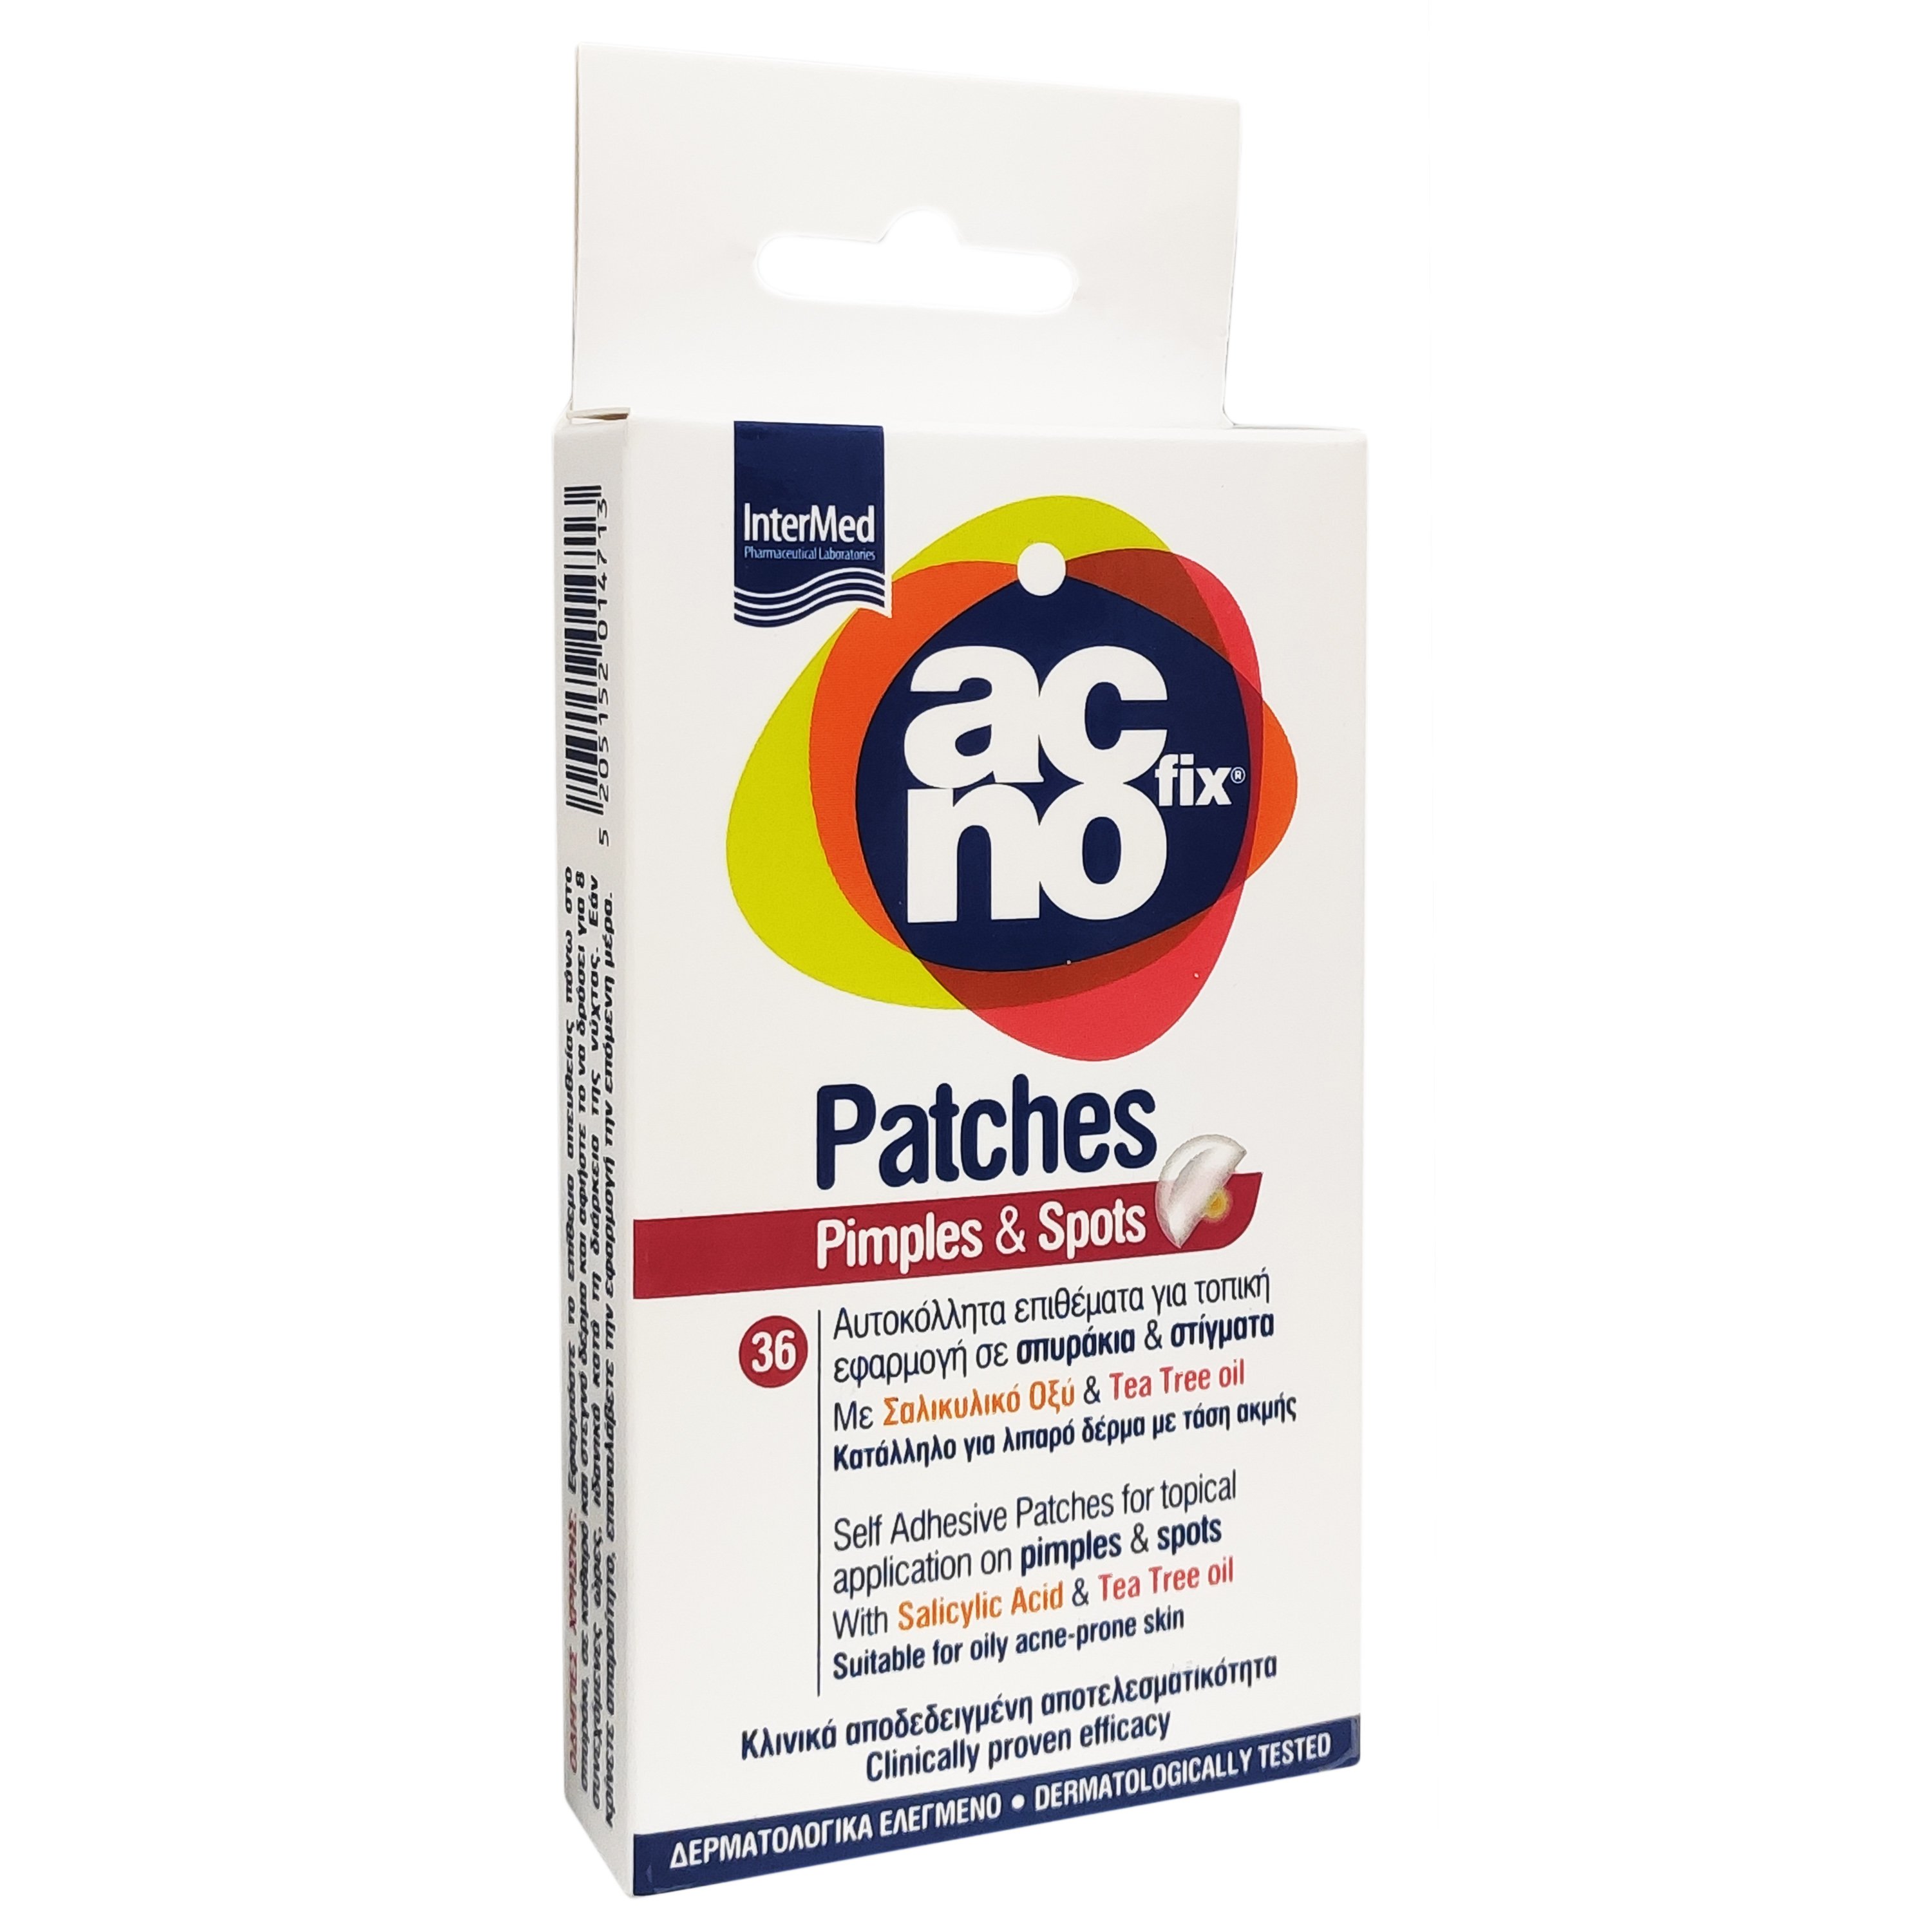 Acnofix Patches for Pimples & Spots Αυτοκόλλητα Επιθέματα για Τοπική Εφαρμογή σε Σπυράκια & Στίγματα 36 Τεμάχια 41191